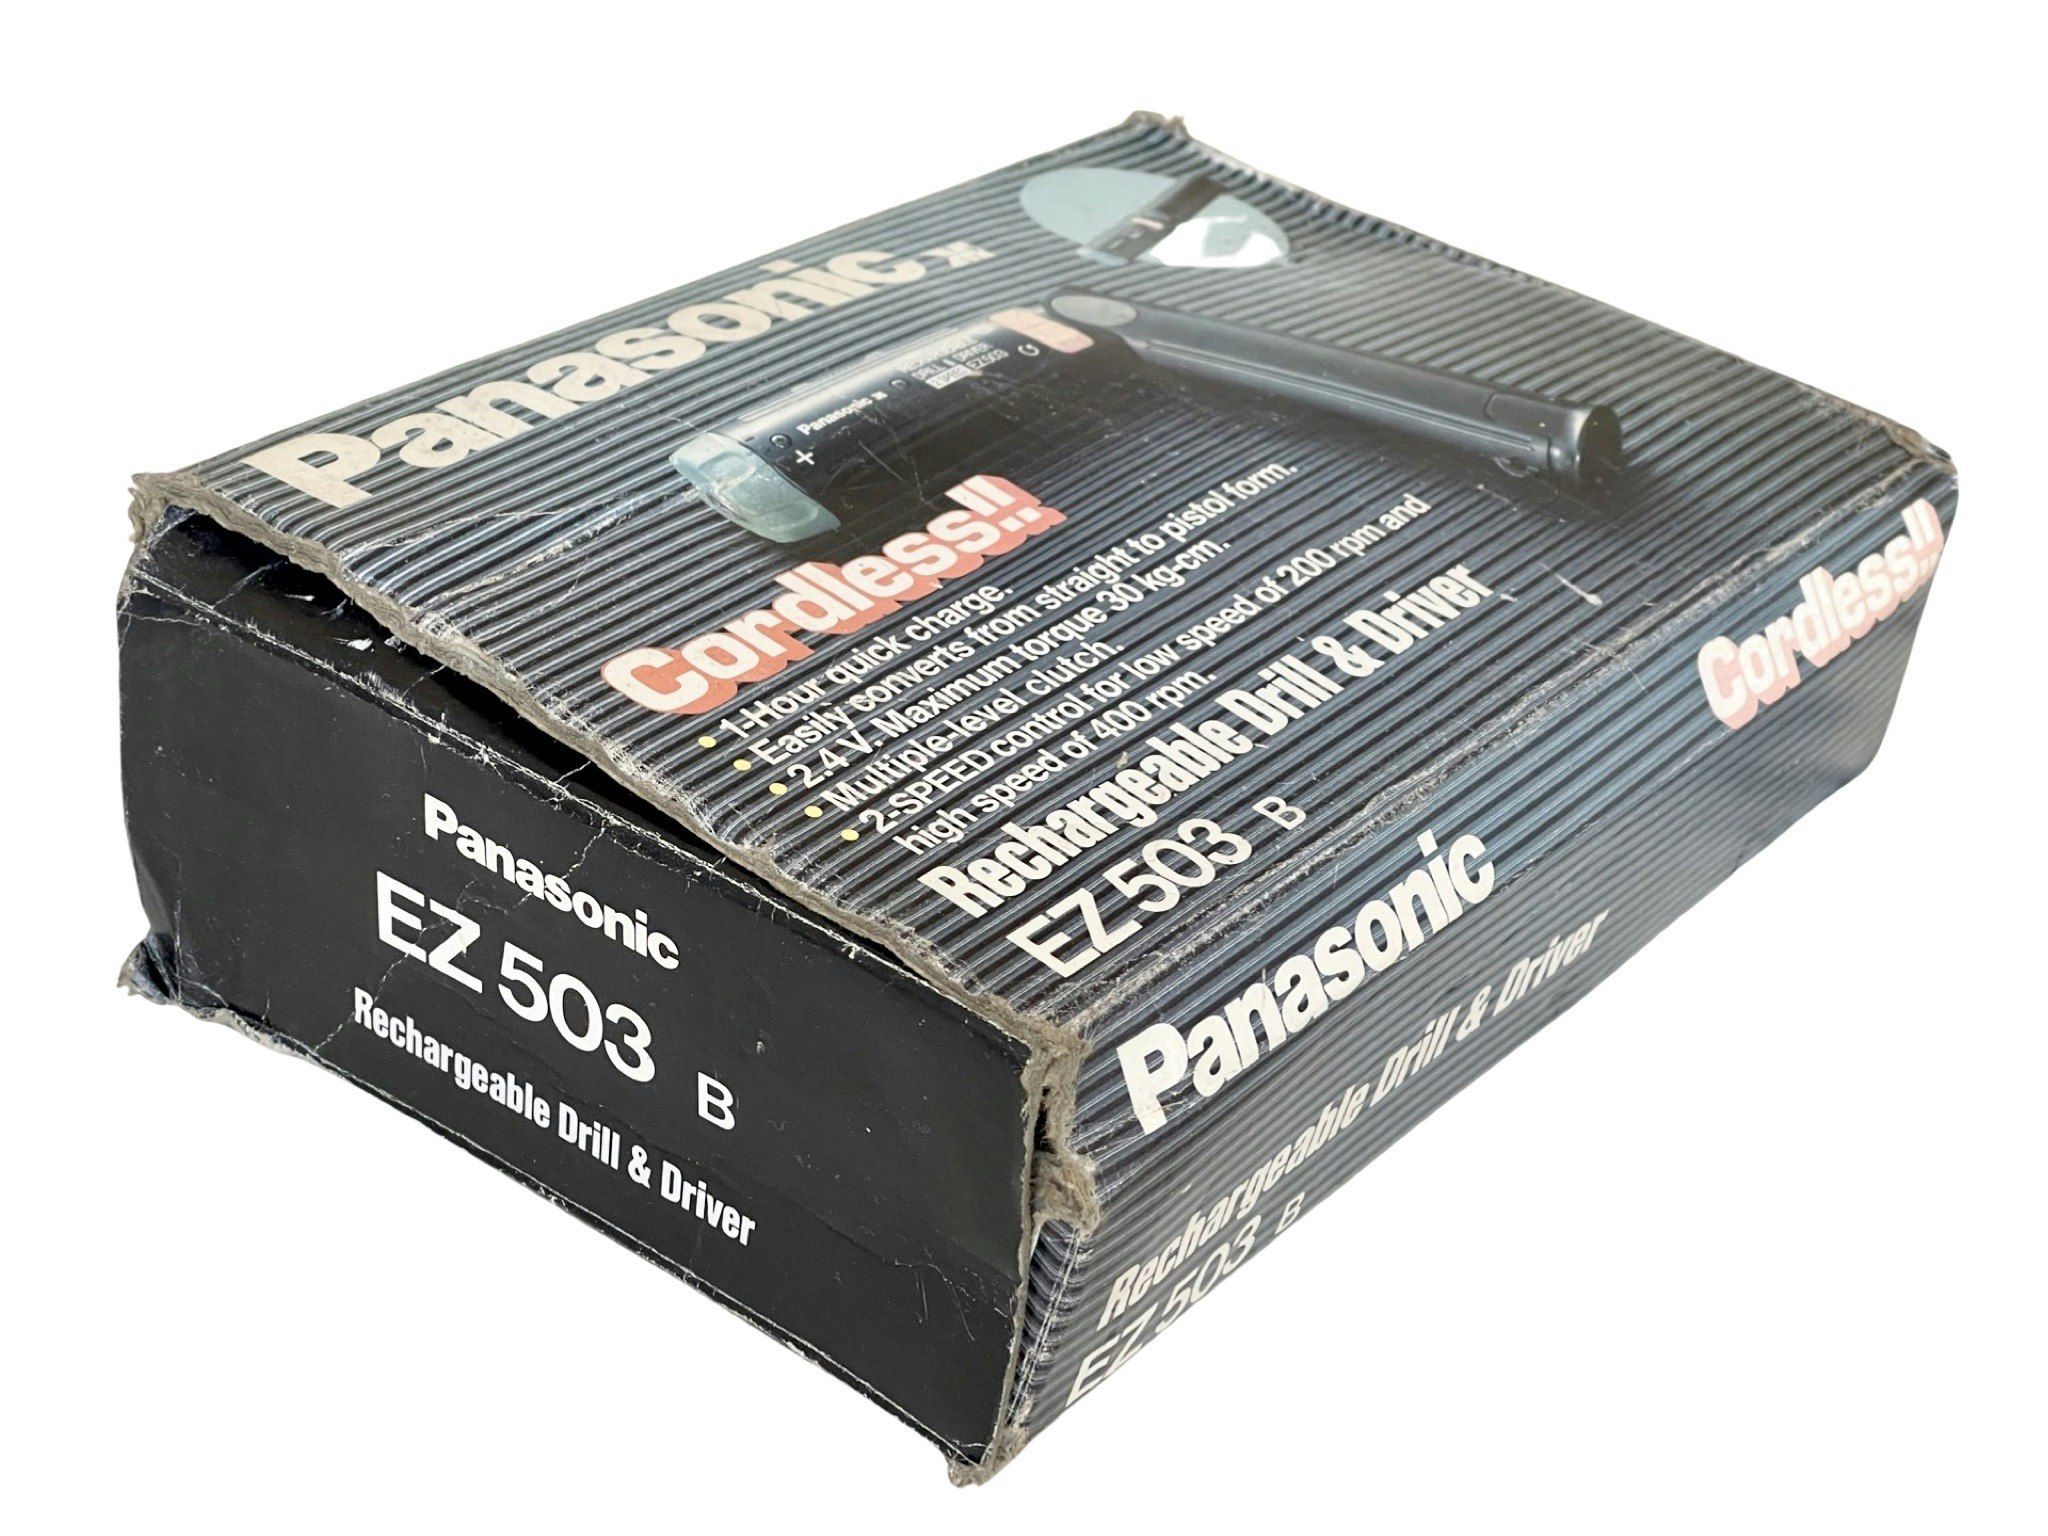 Panasonic Rechargeable Drill & Driver, Cordless EZ503B